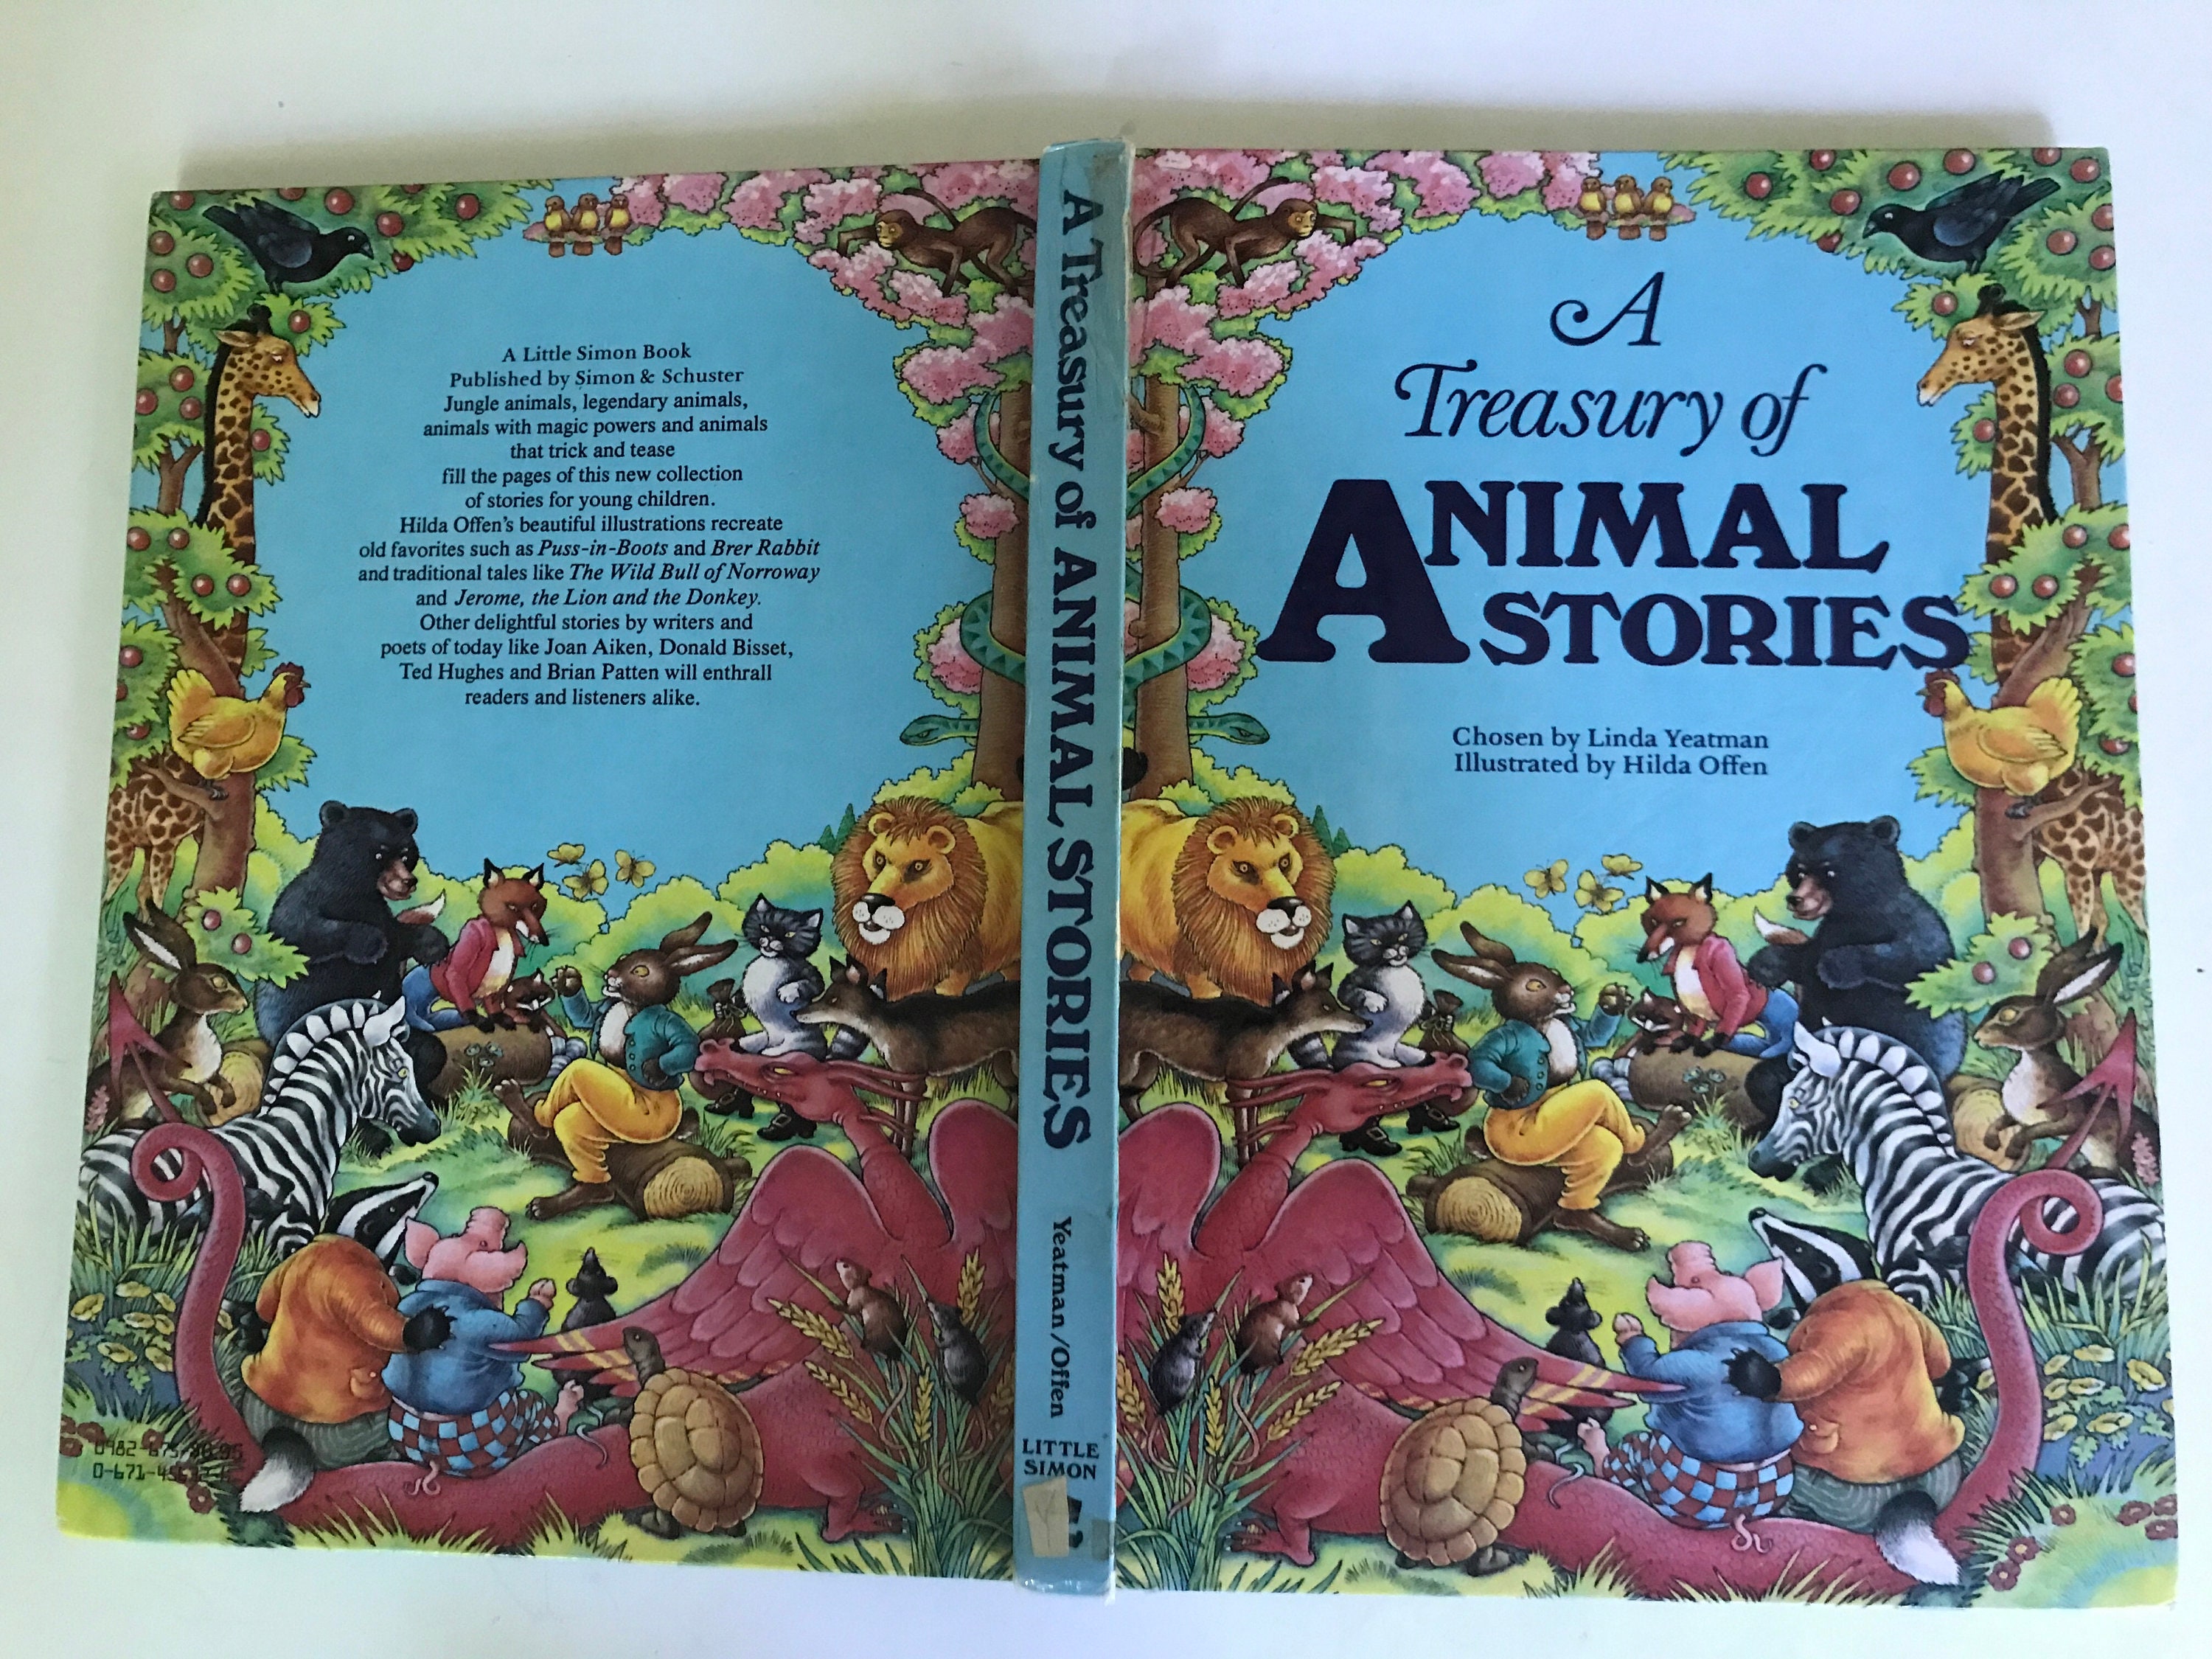 A Treasury of Animal Stories Chosen by Linda Yeatman